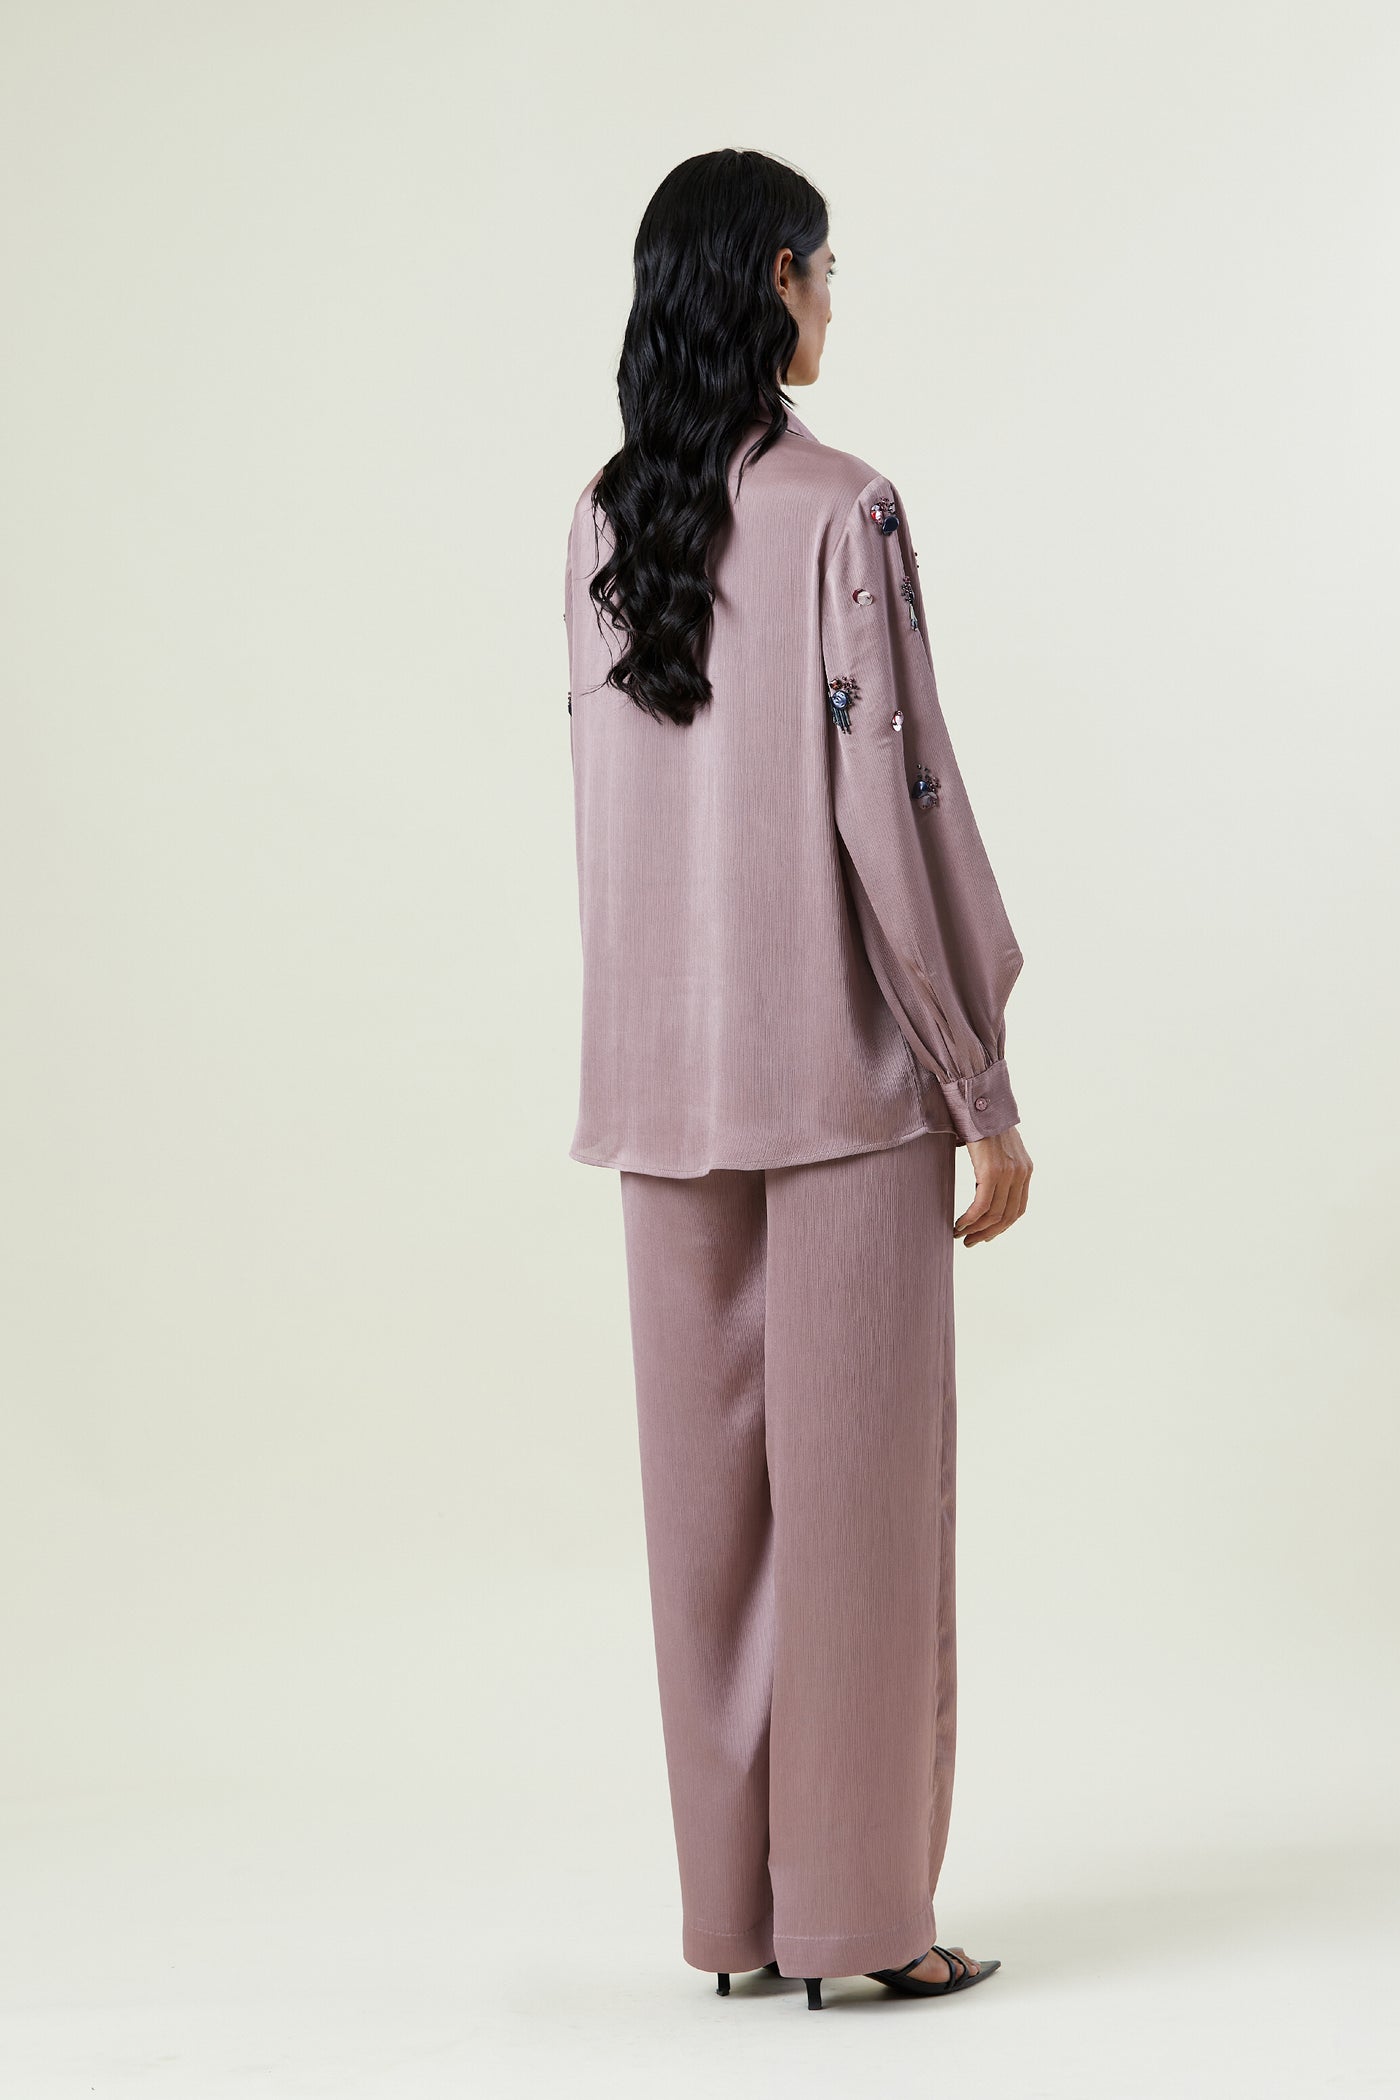 Kanika Goyal Label Ella Embellished Co Ordinated Set indian designer wear online shopping melange singapore